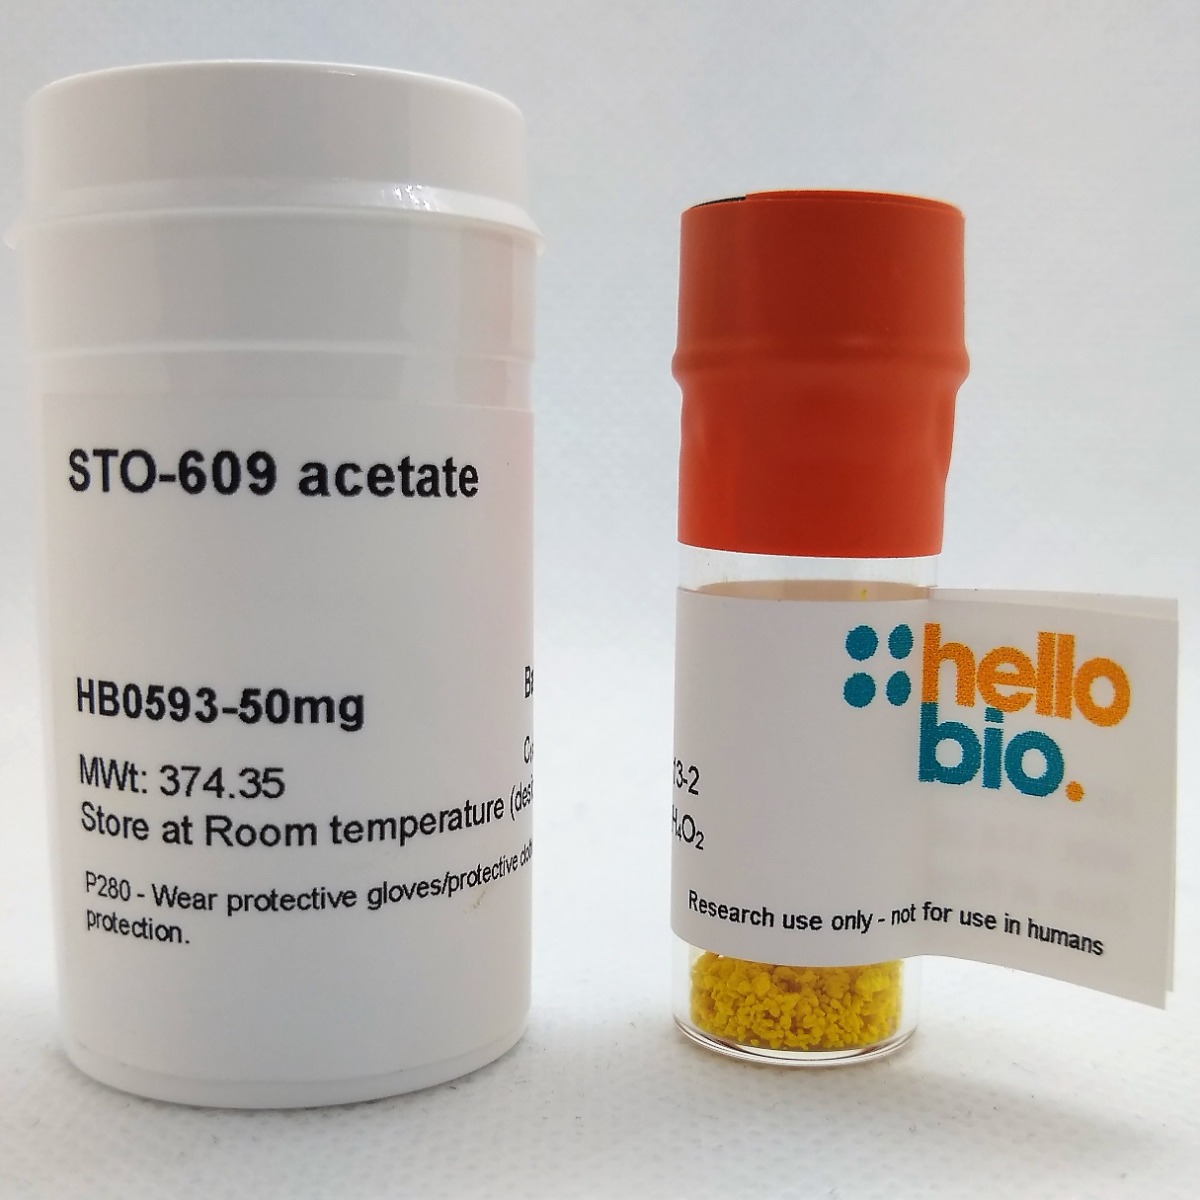 STO-609 acetate product vial image | Hello Bio